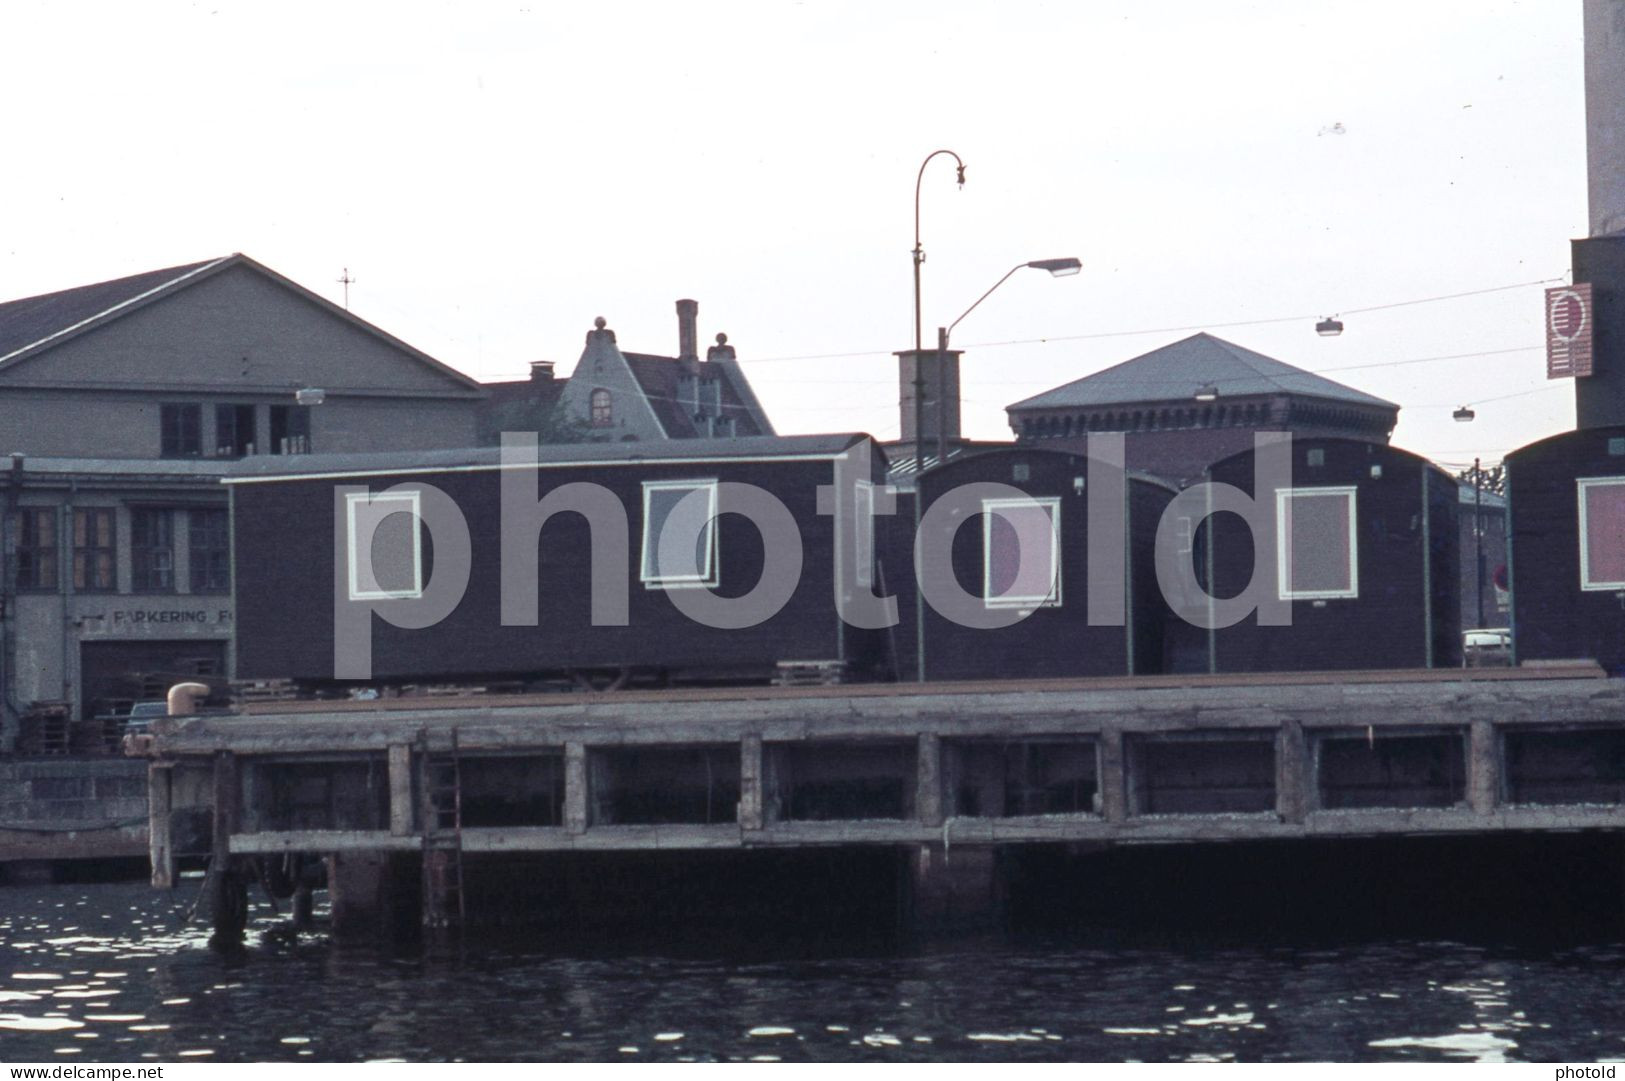 6 SLIDES SET 1977 OSLO NORWAY FJORDER NORGE AMATEUR 35mm SLIDE PHOTO 35mm DIAPOSITIVE SLIDE Not PHOTO No FOTO NB4161 - Dias